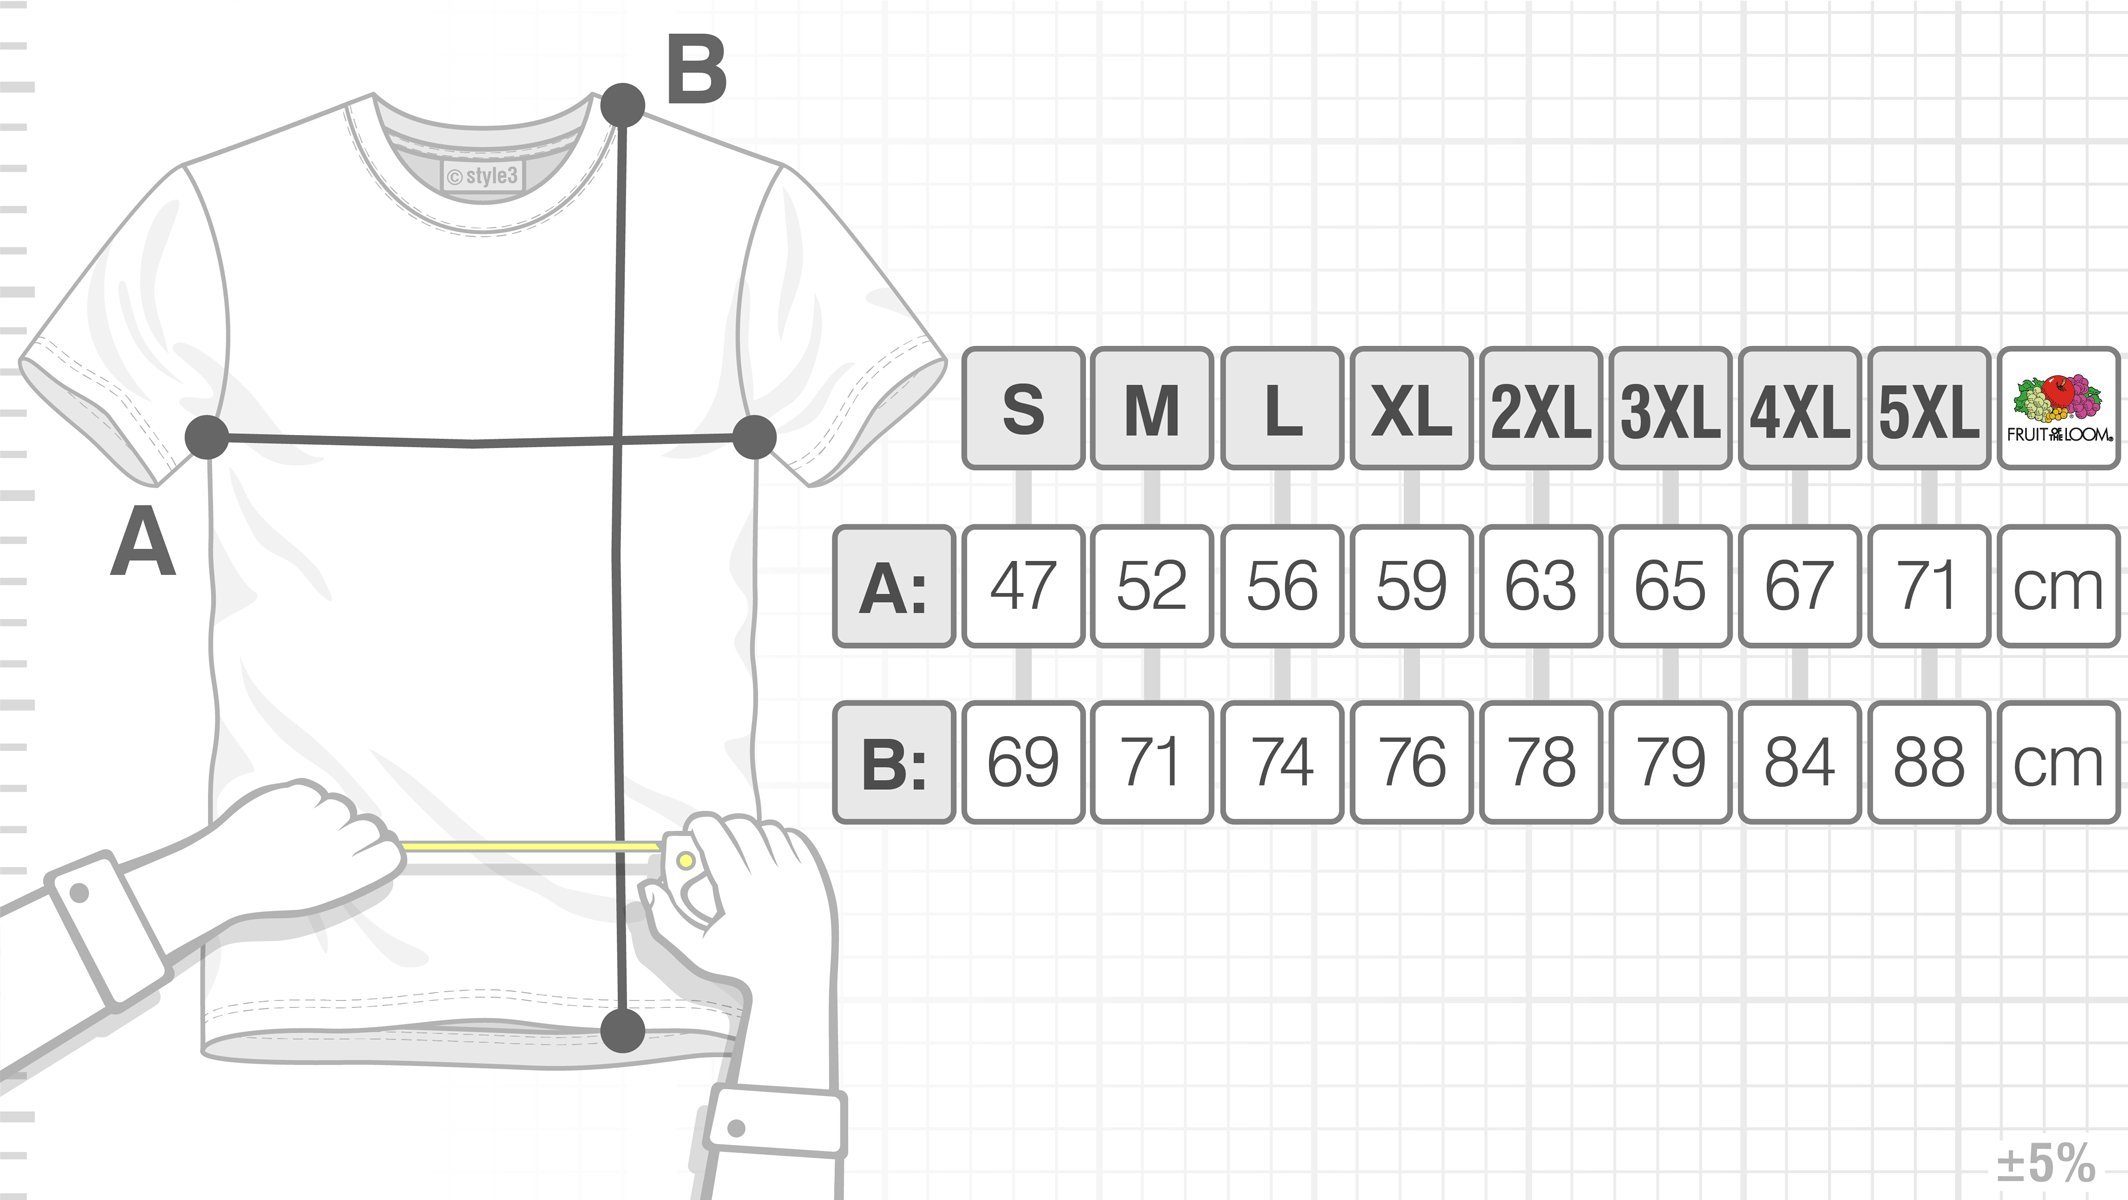 explosion Cube theory Print-Shirt Sheldon bang big Herren style3 cooper rubik T-Shirt zauberwürfel